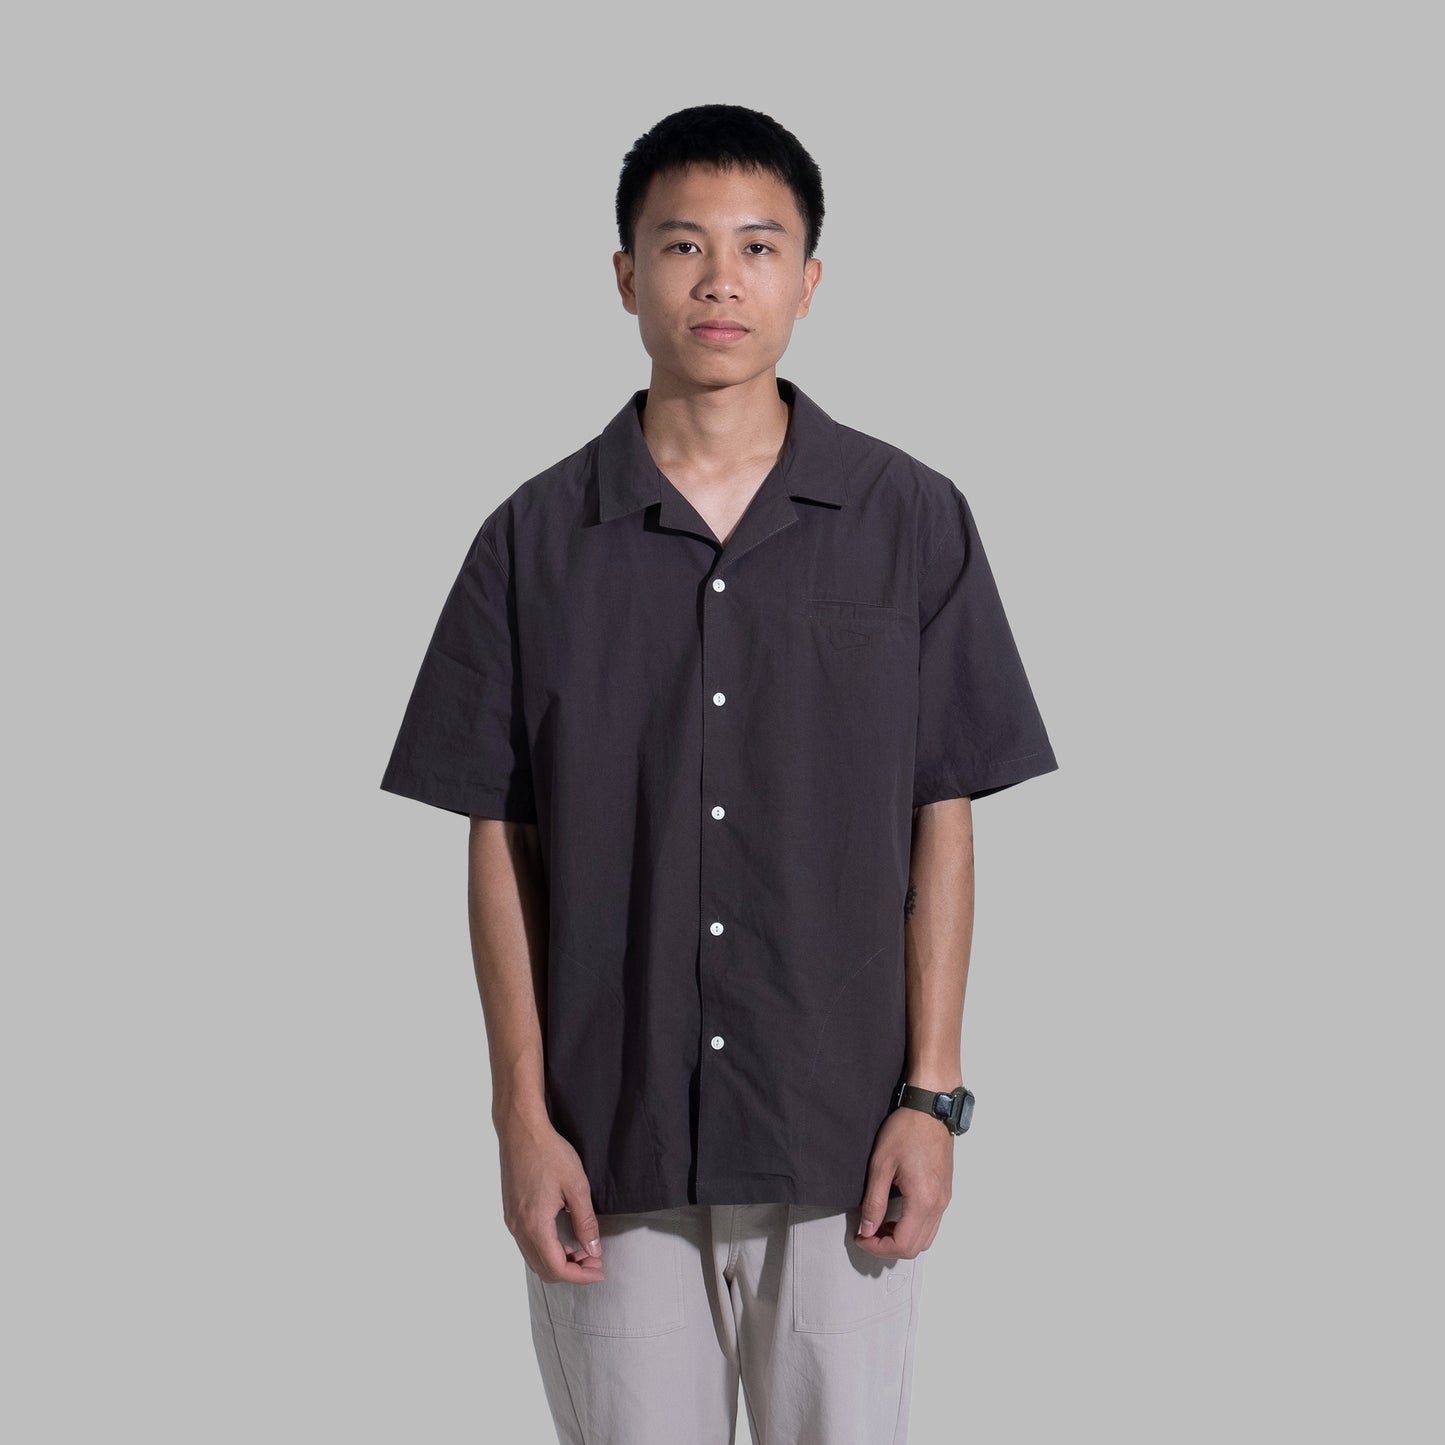 Work Shirt / Cotton - Charcoal